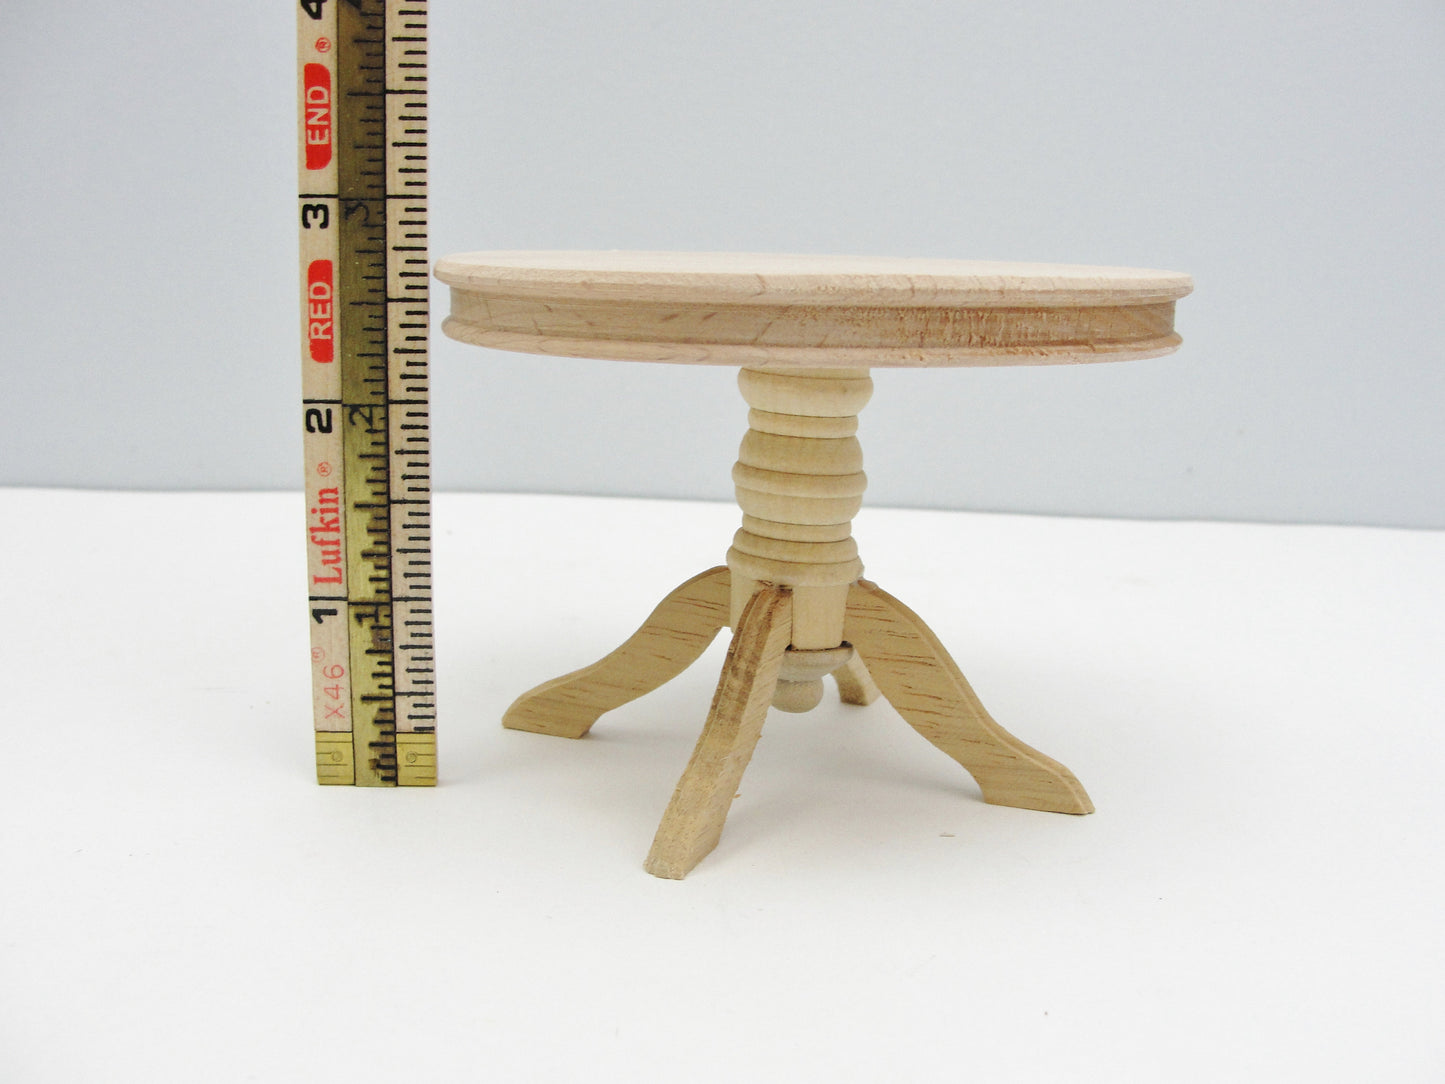 Dollhouse furniture miniature round oak pedestal table - Miniatures - Craft Supply House